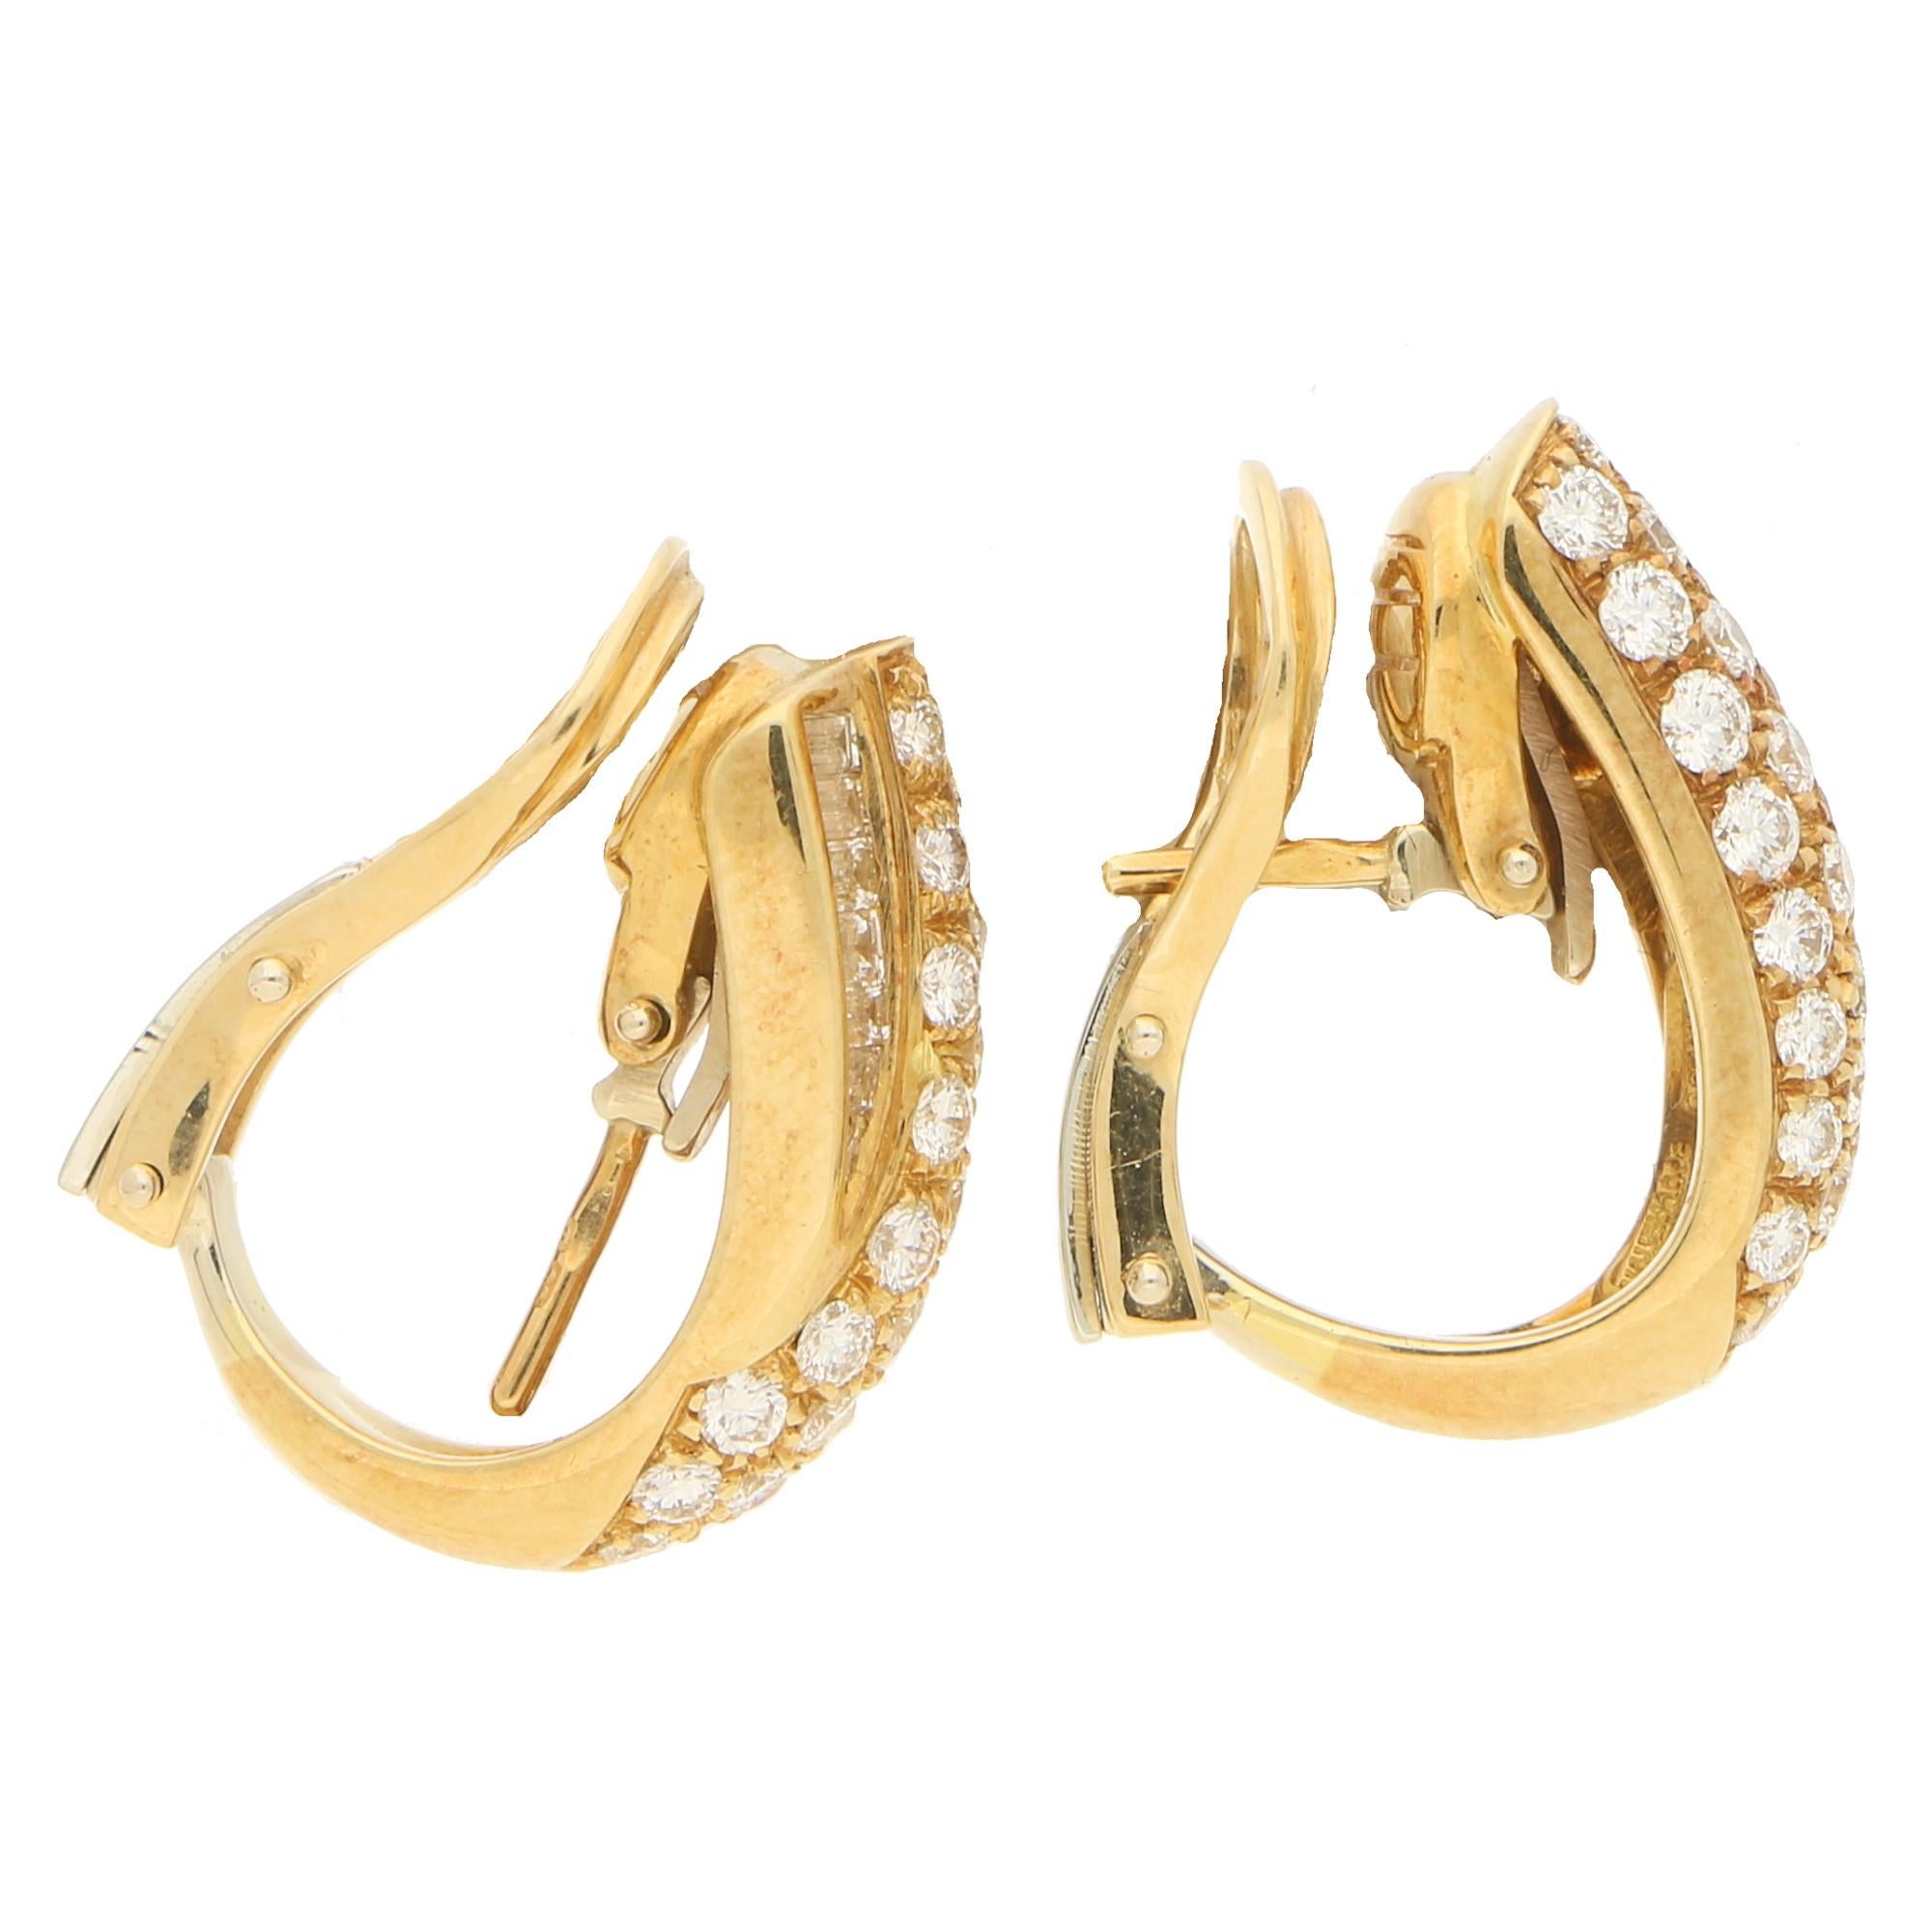 Baguette Cut Boucheron Diamond Clip-On Earrings in 18ct Yellow Gold 1.00ct